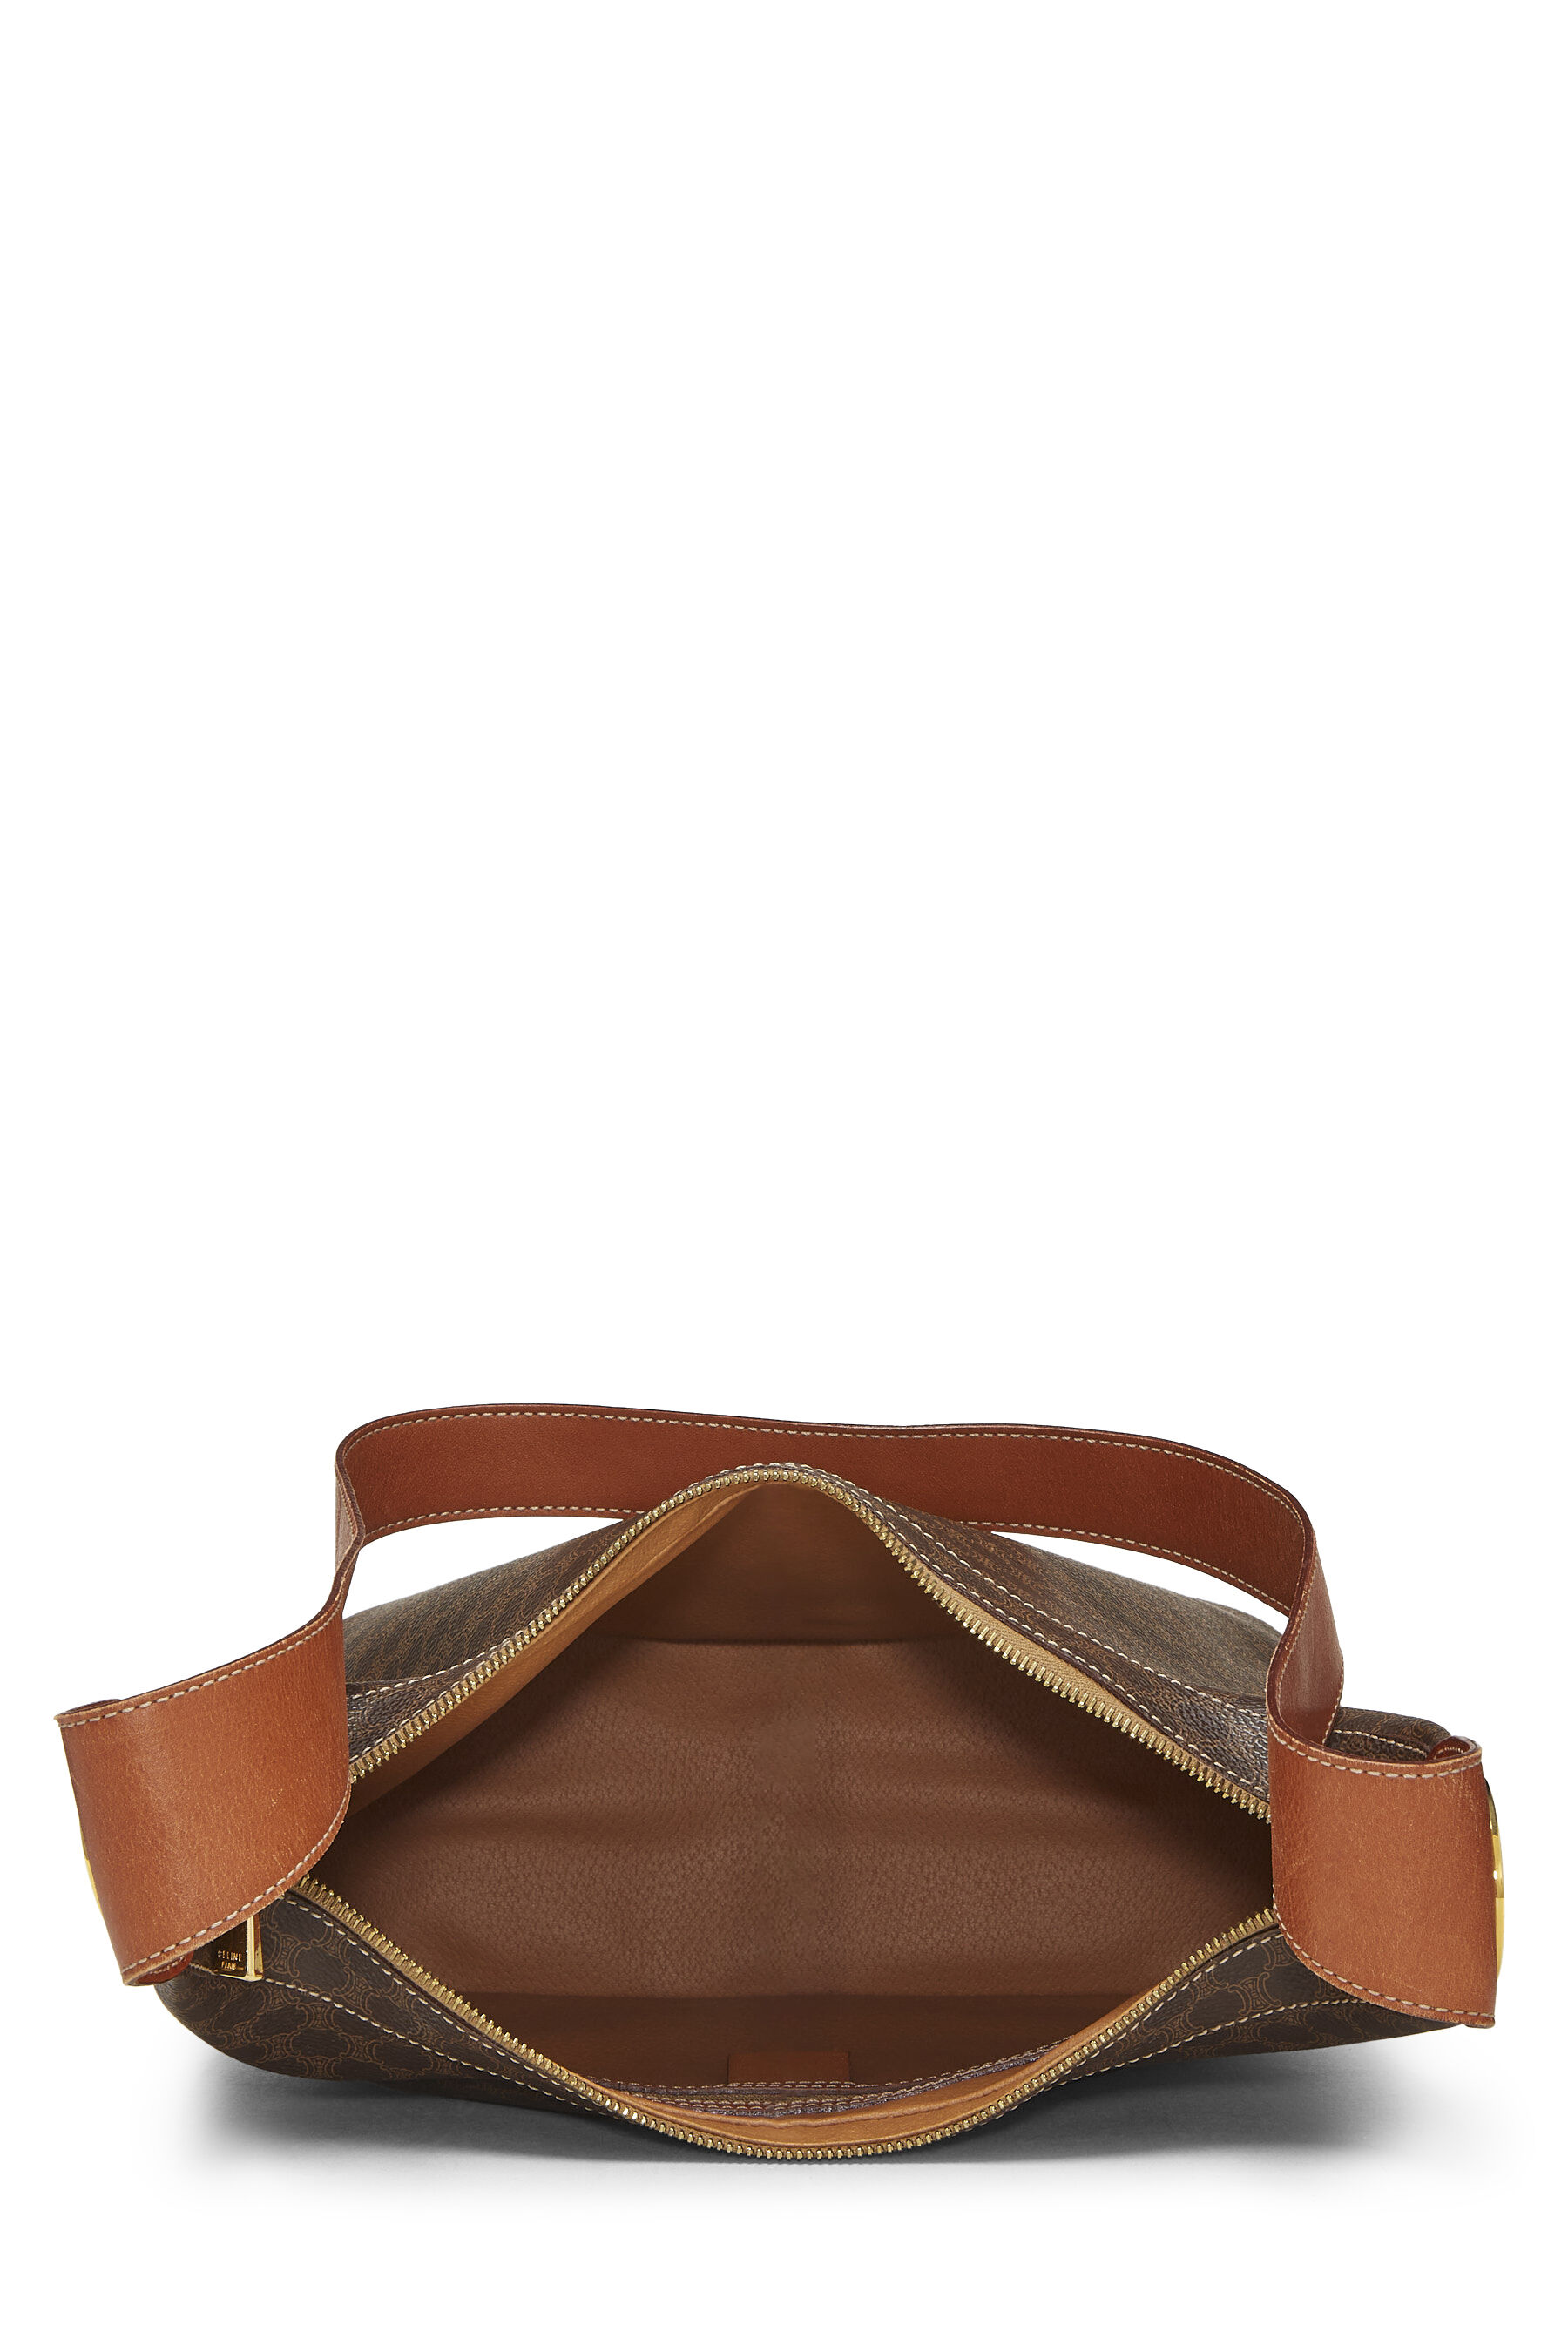 Brown Coated Canvas Macadam Shoulder Bag